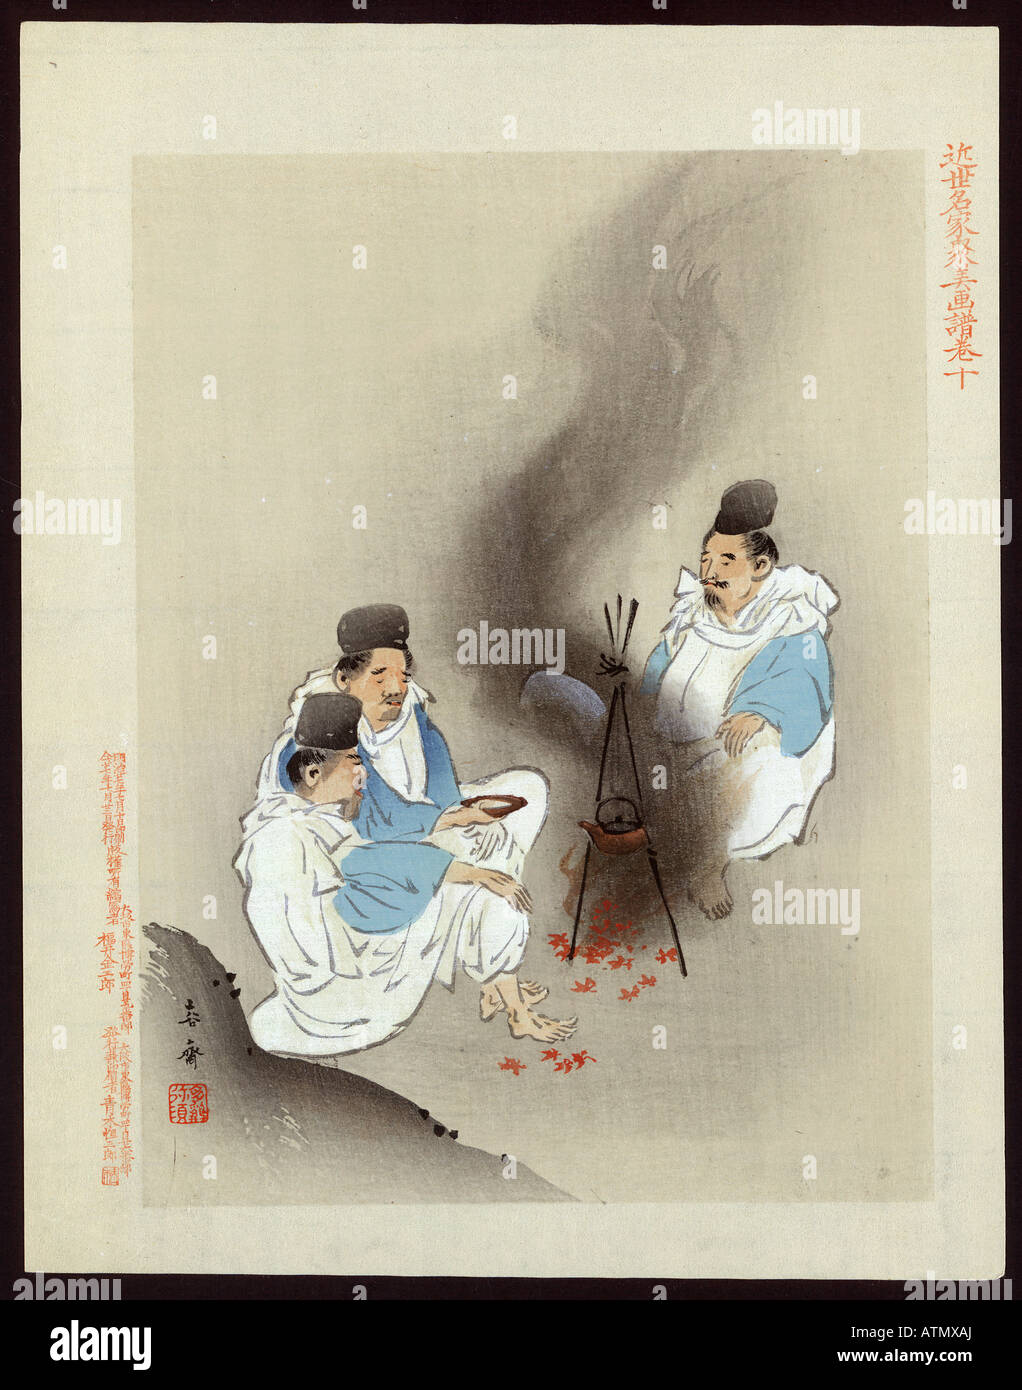 Japanese Ukiyo e print pilgrims or merchants resting arround a fire Stock Photo